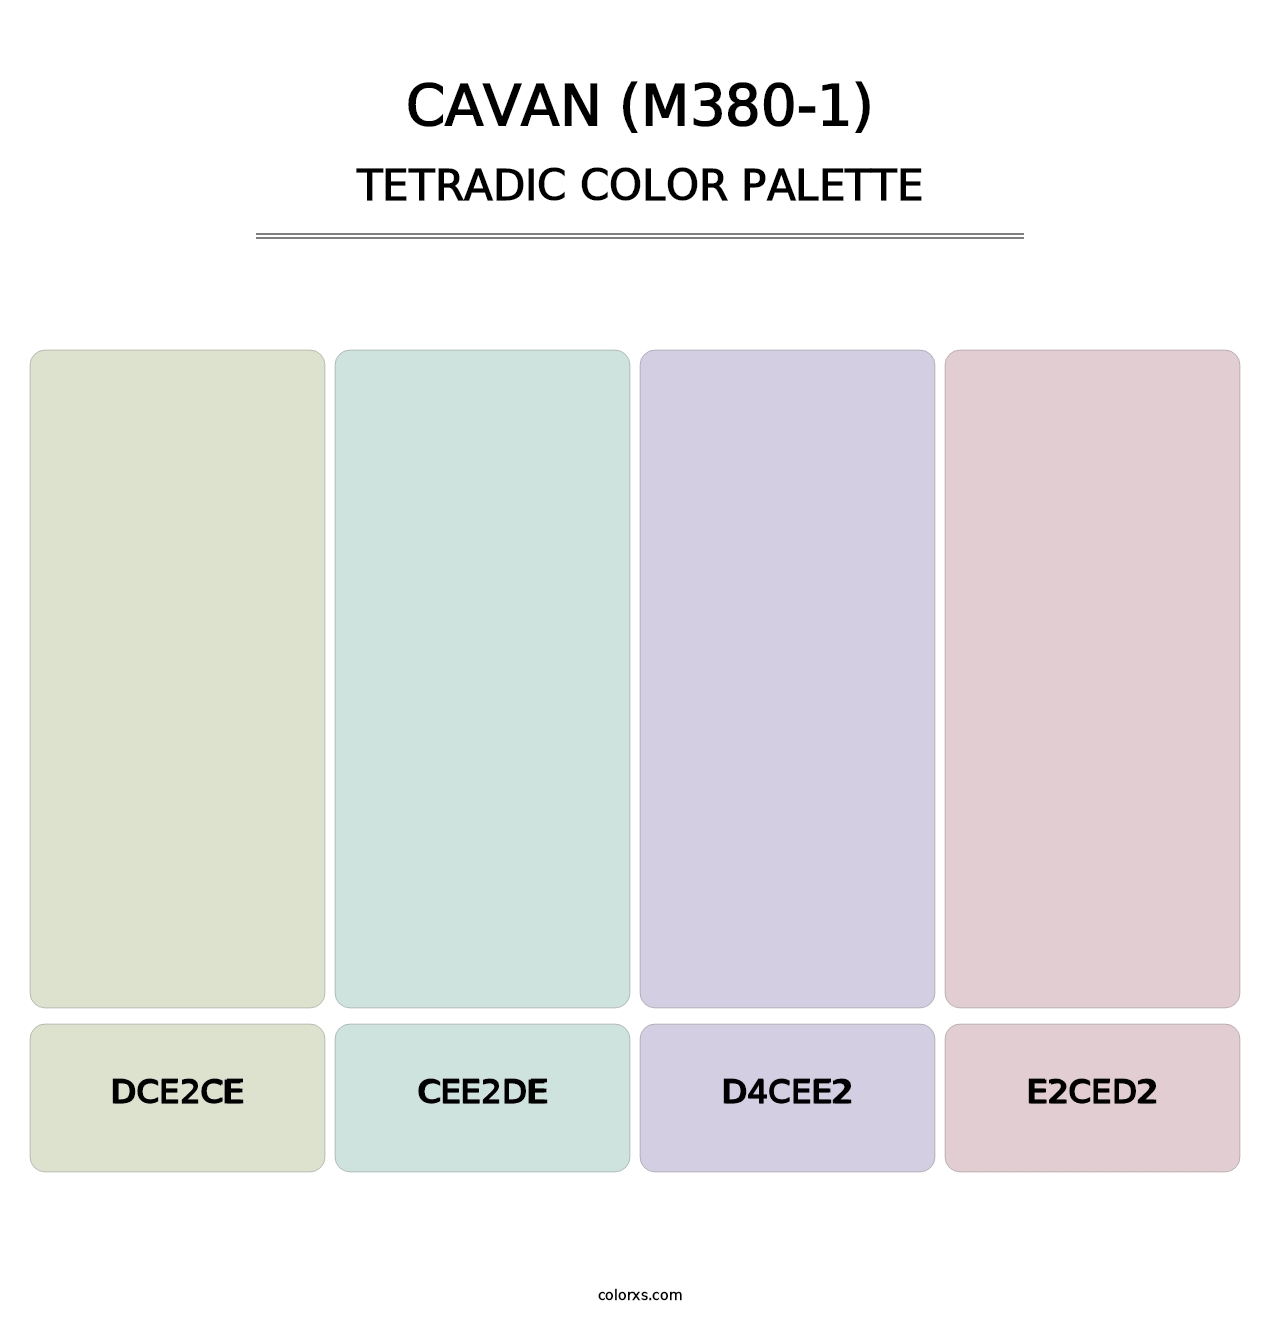 Cavan (M380-1) - Tetradic Color Palette